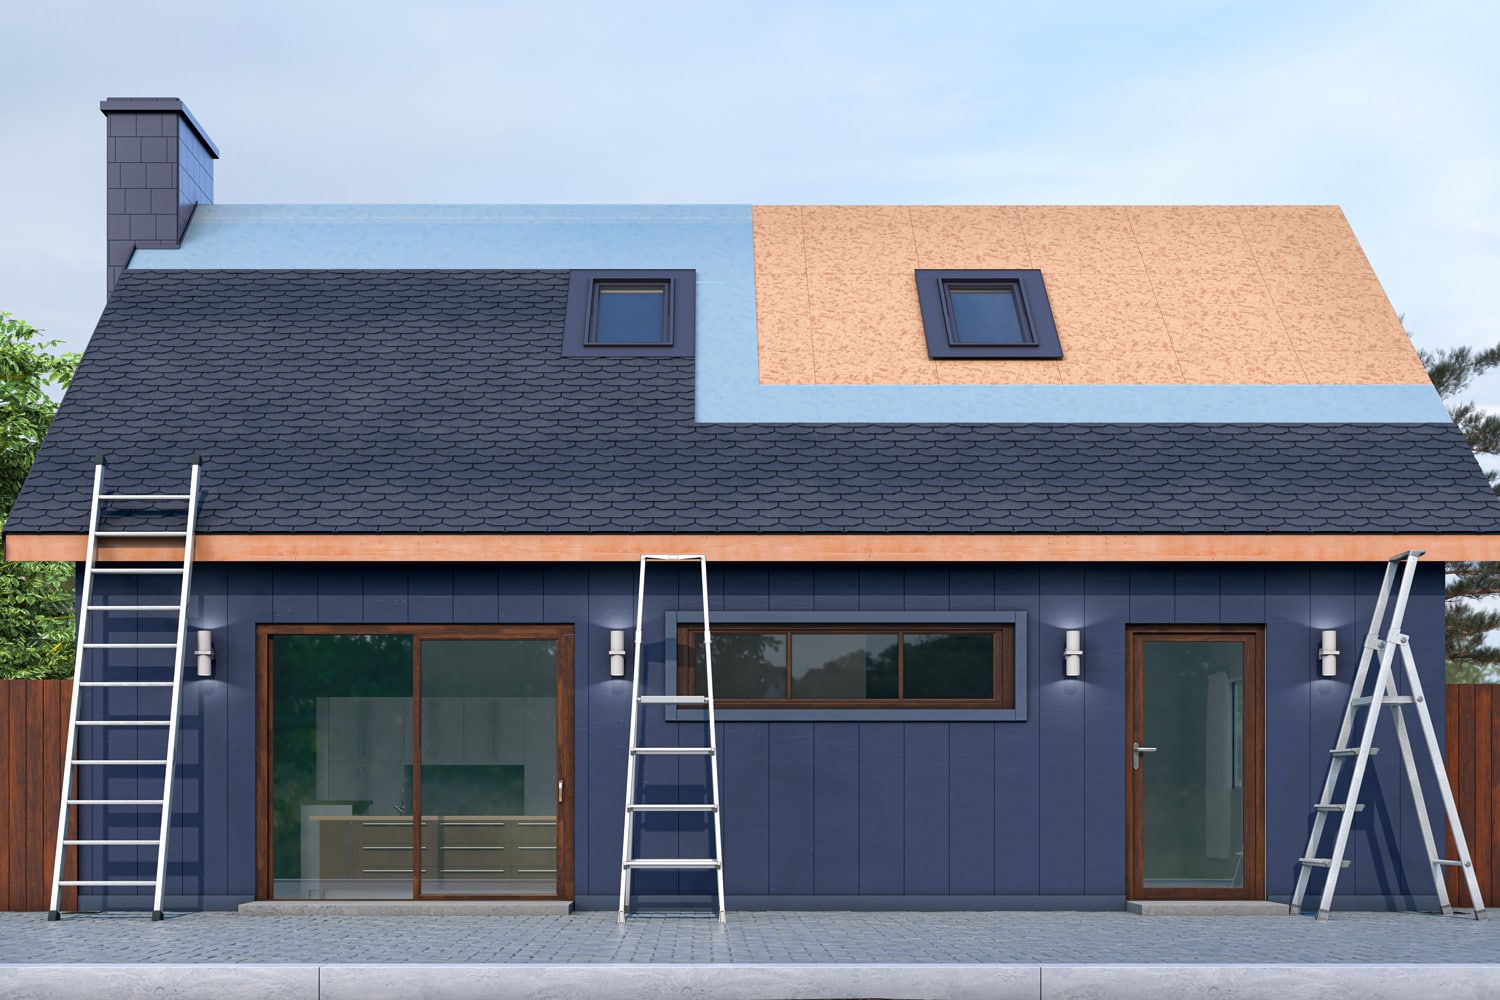 Roofing modern modular house with asphalt shingle roof.